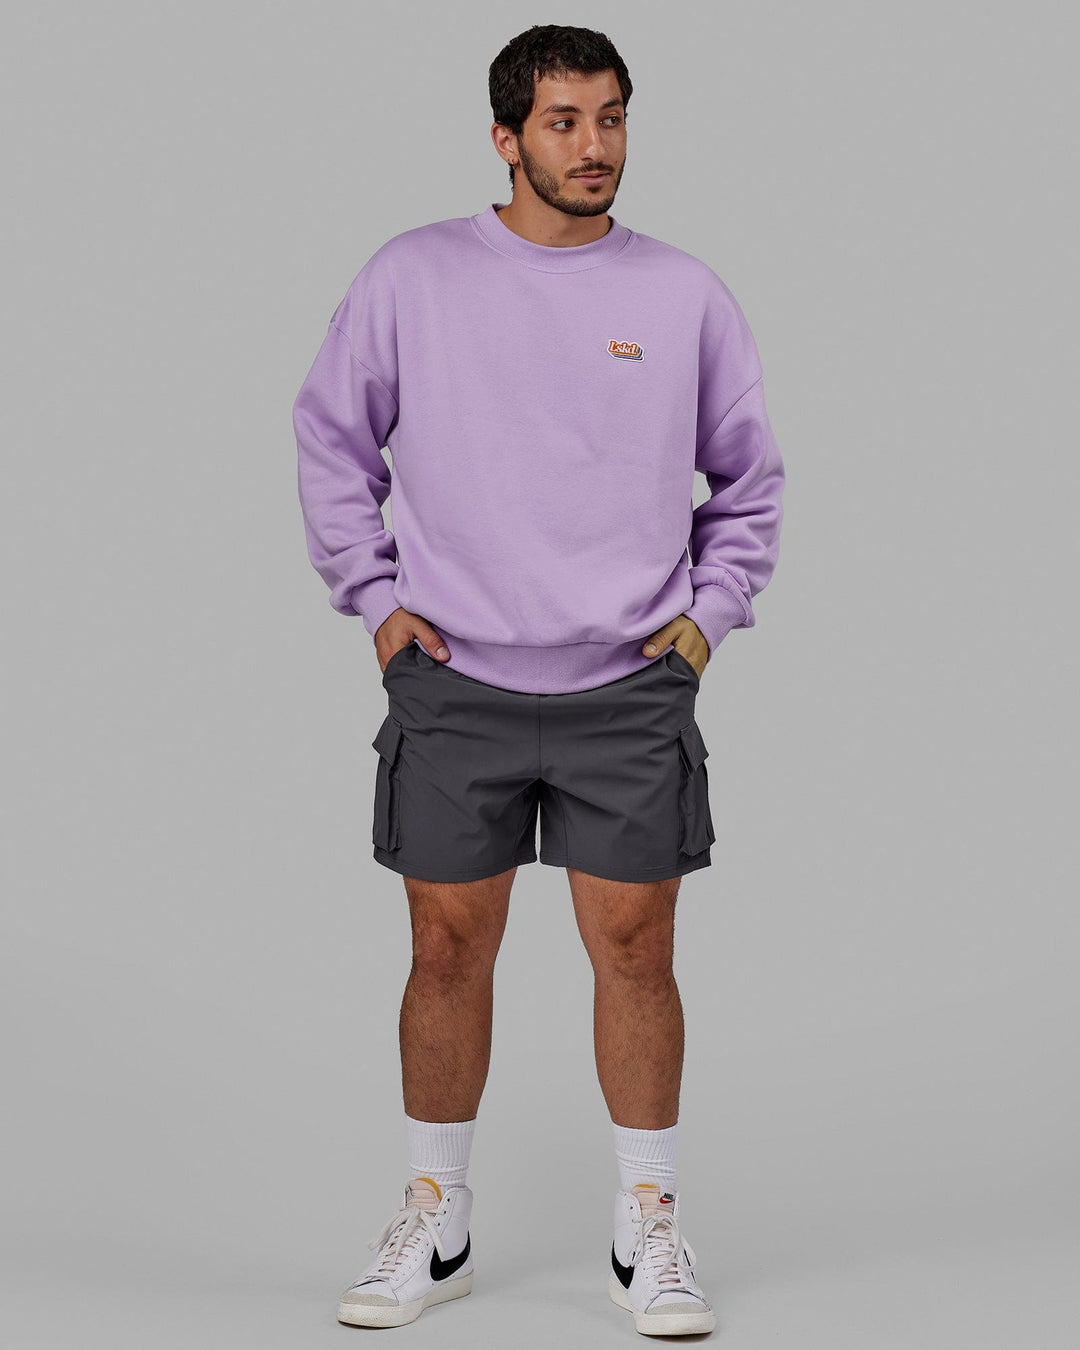 Man wearing Unisex Radiate Sweater Oversize - Pale Lilac